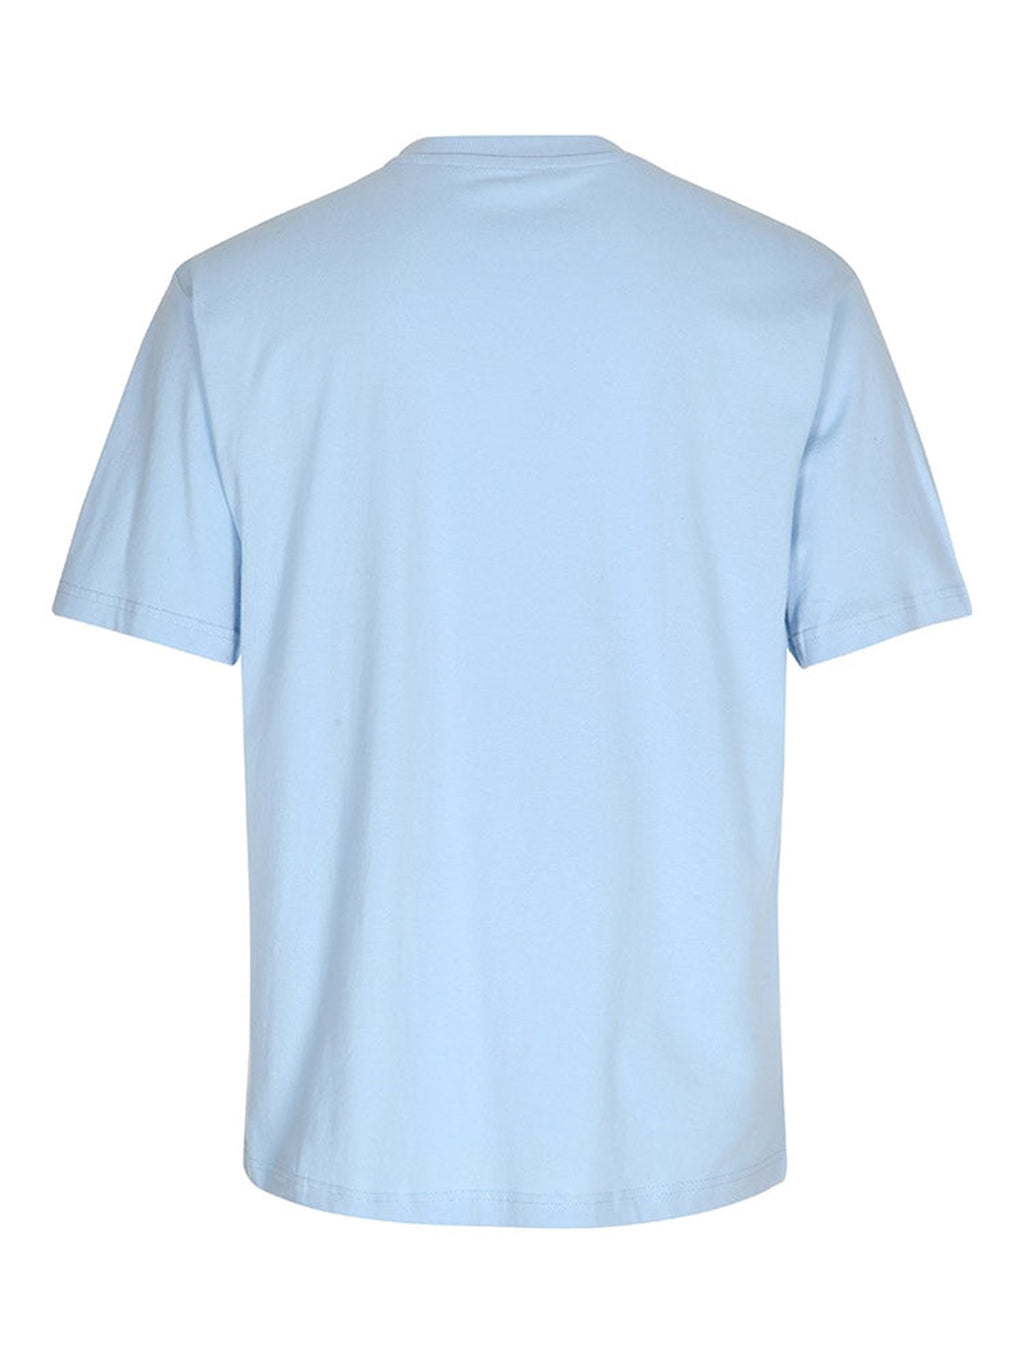 Oversized t-shirt - Sky Blue